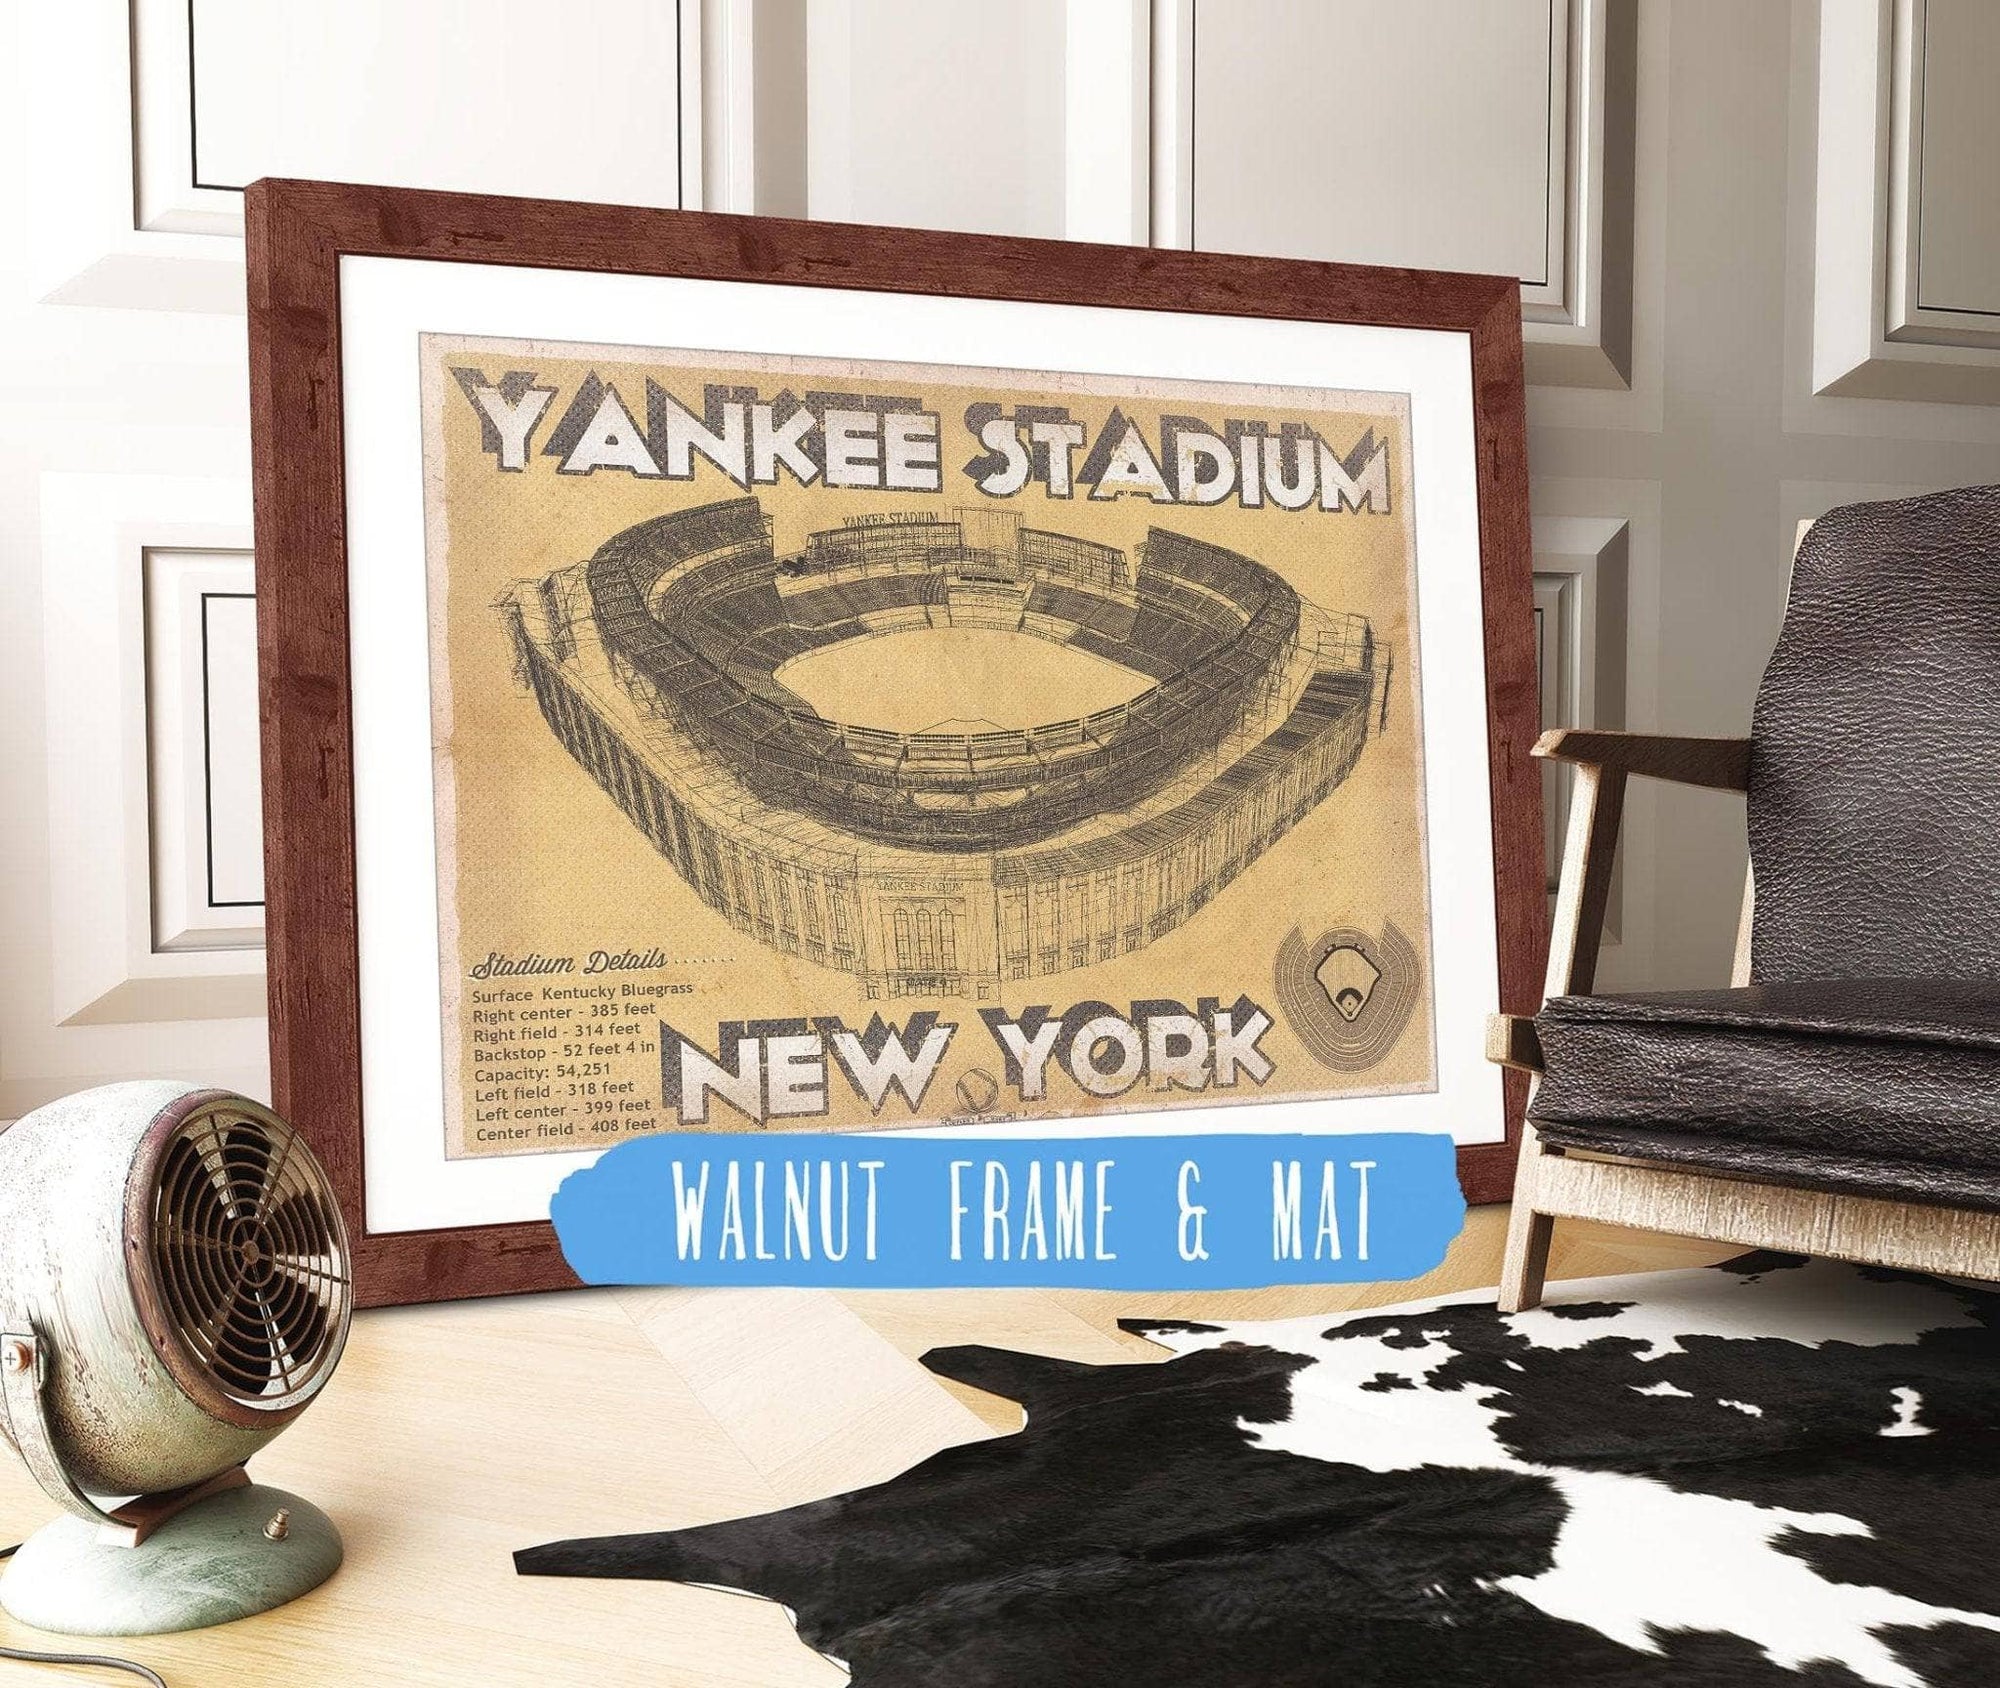 Cutler West Baseball Collection 14" x 11" / Walnut Frame & Mat NY Yankees - Vintage Yankee Stadium Blueprint Baseball Print 715530501